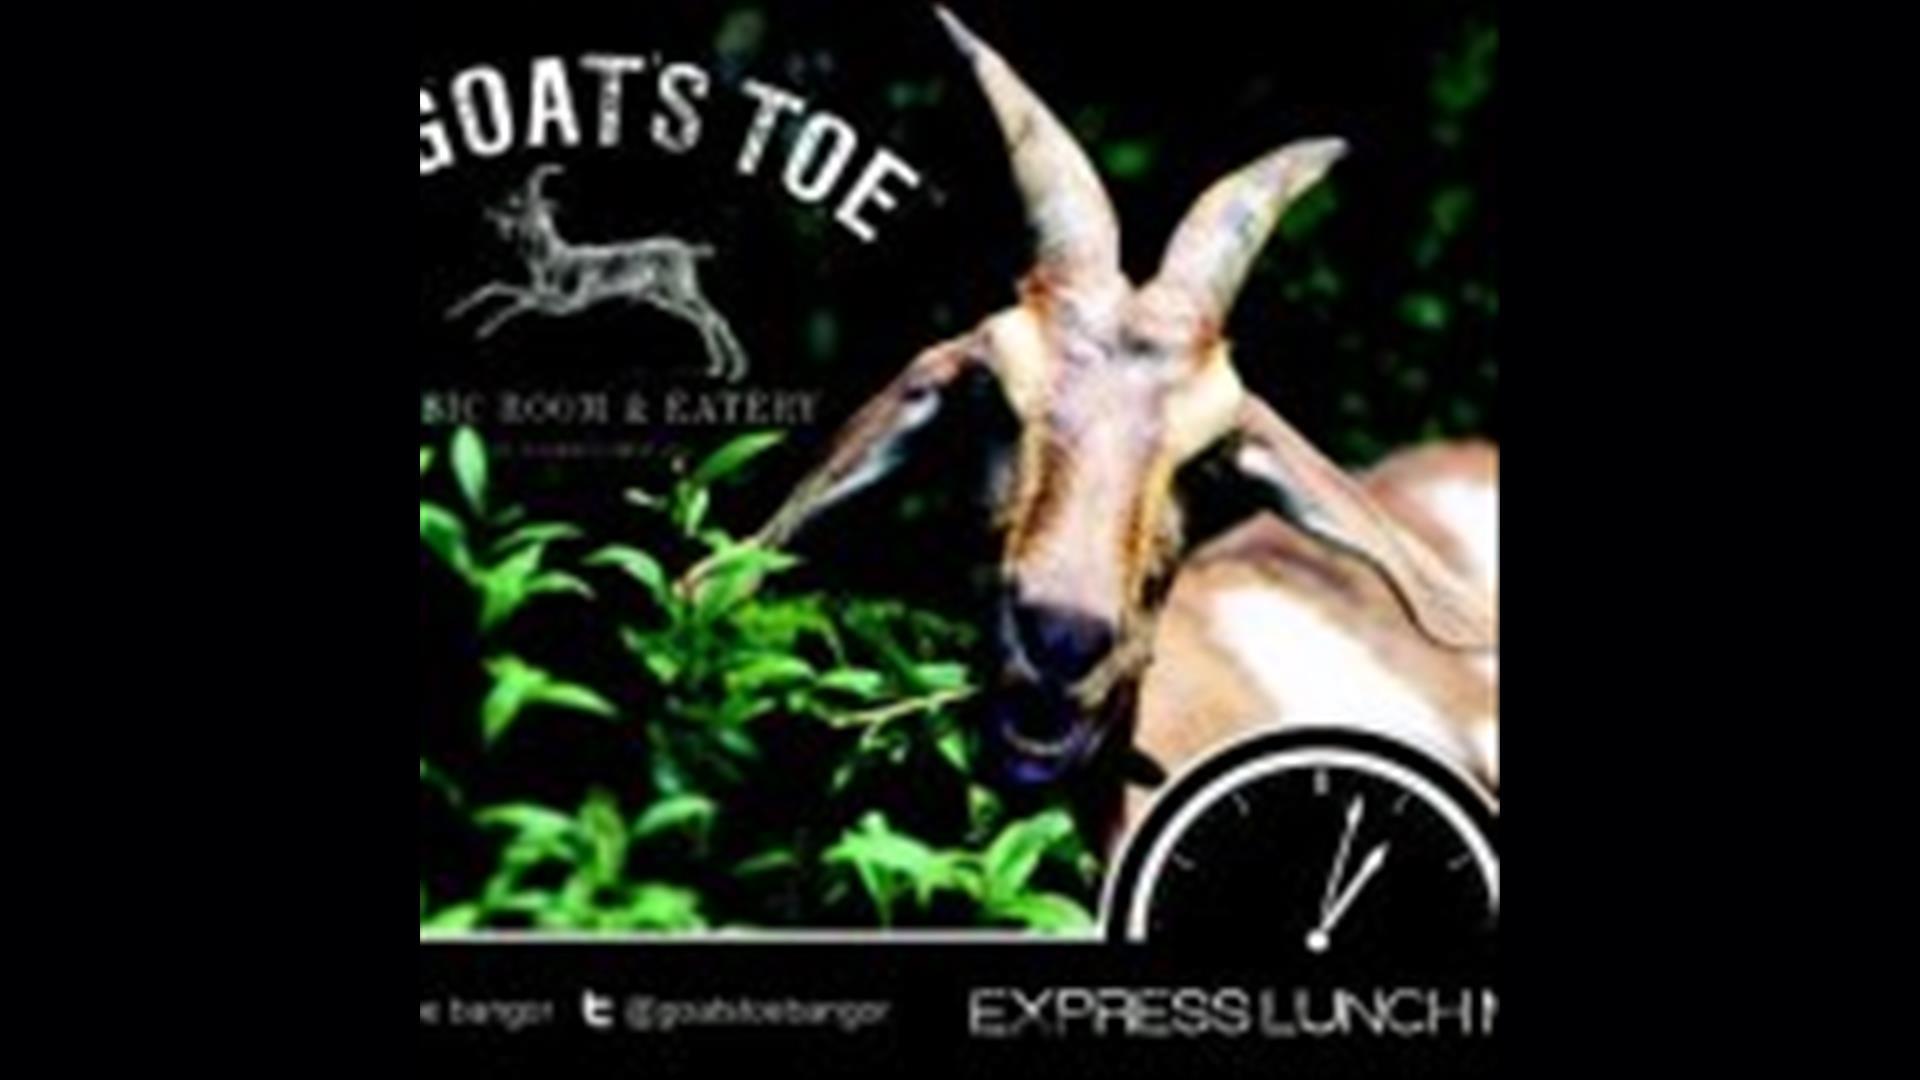 The Goats Toe